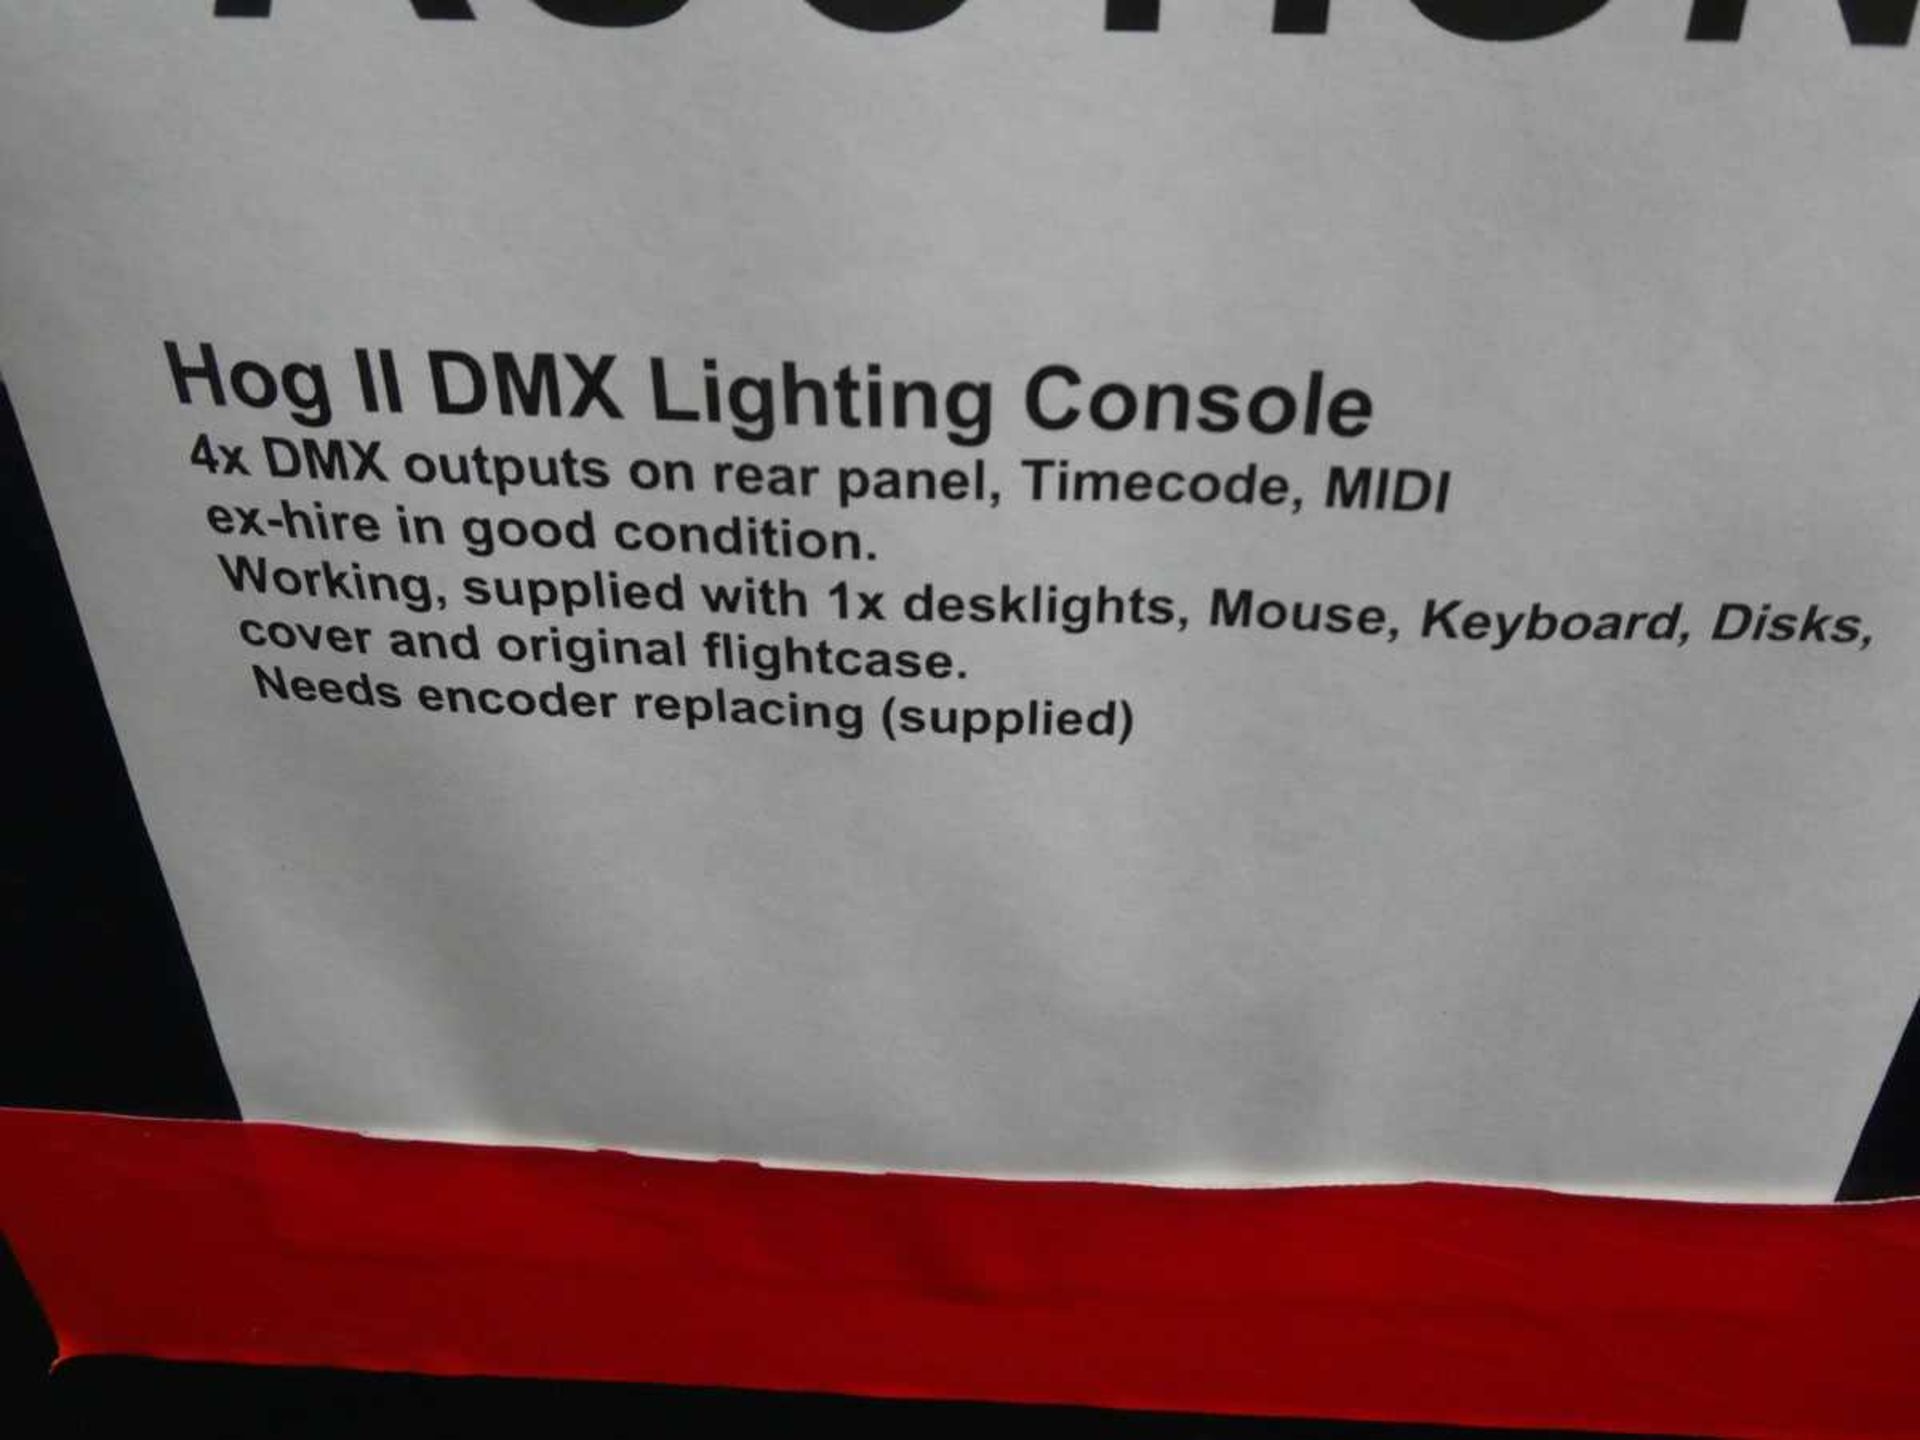 +VAT Hog II DMX Lighting Console with 4x DMX outputs on rear panel, Timecode, MIDI, 1x desklights, - Image 5 of 5